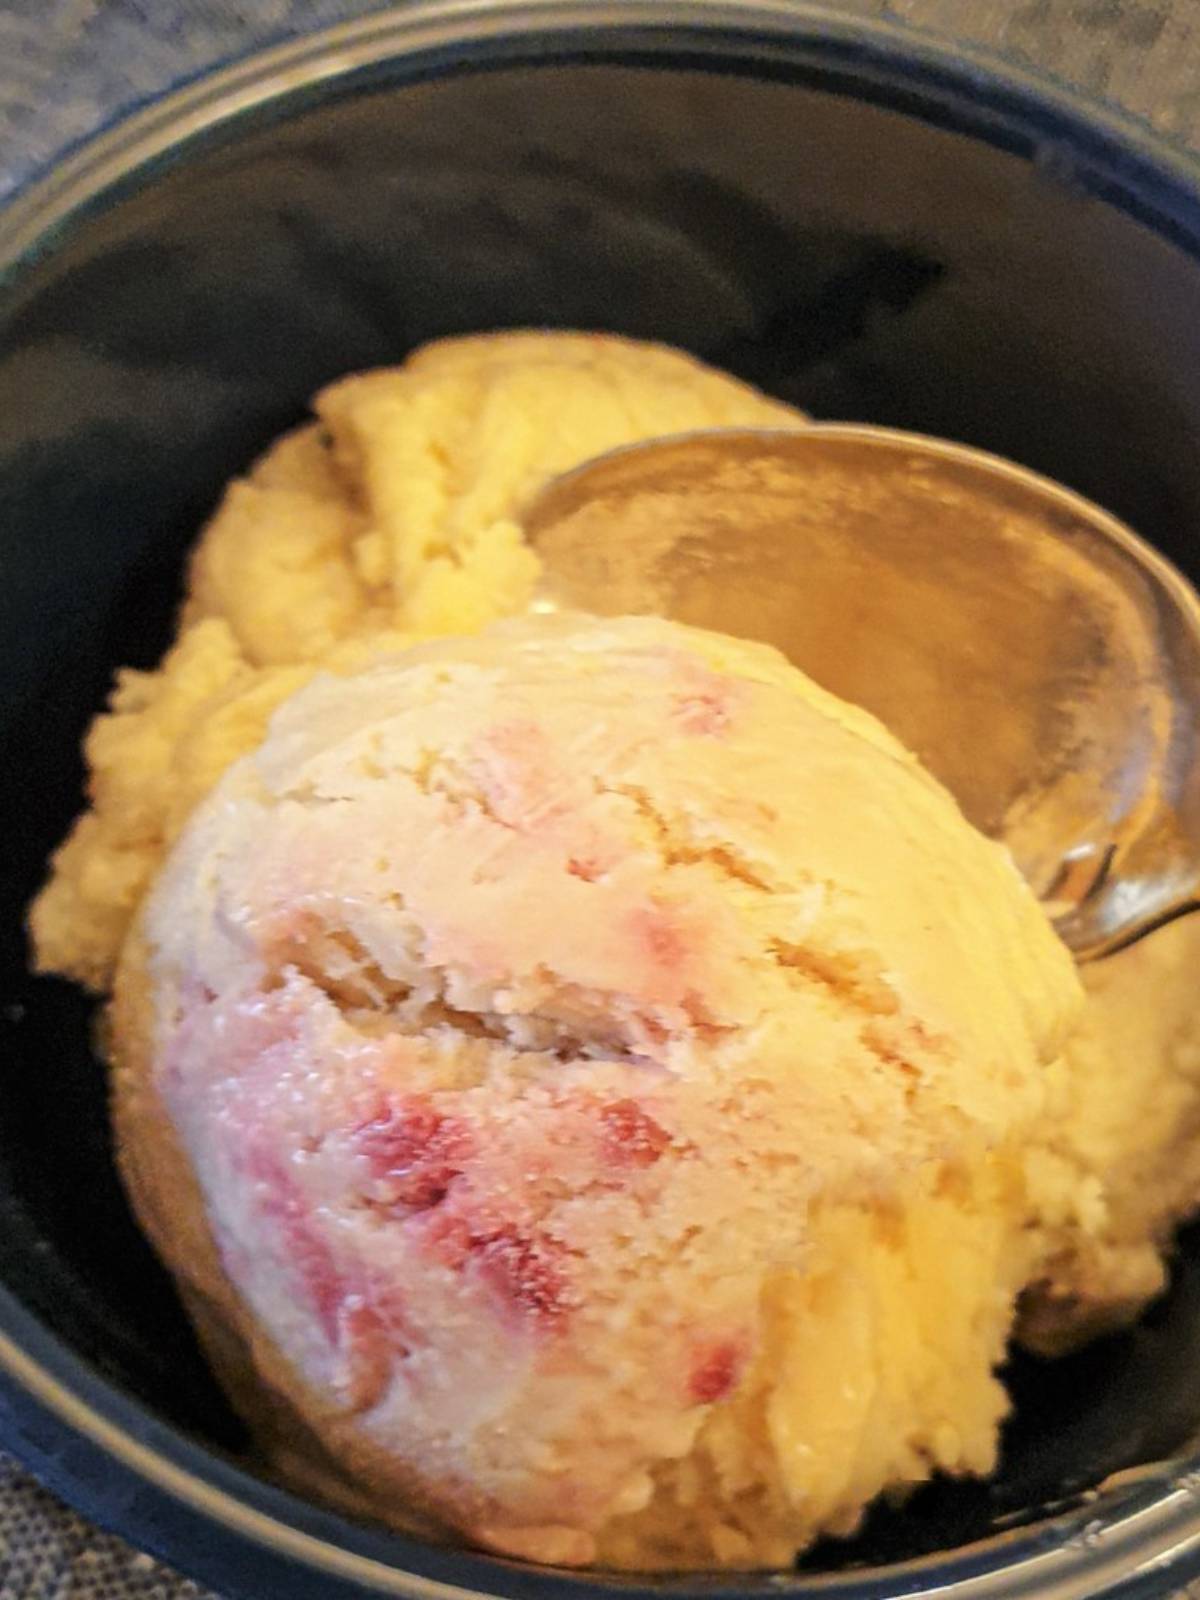 Homemade raspberry ripple ice cream - no ice cream maker - Foodle Club